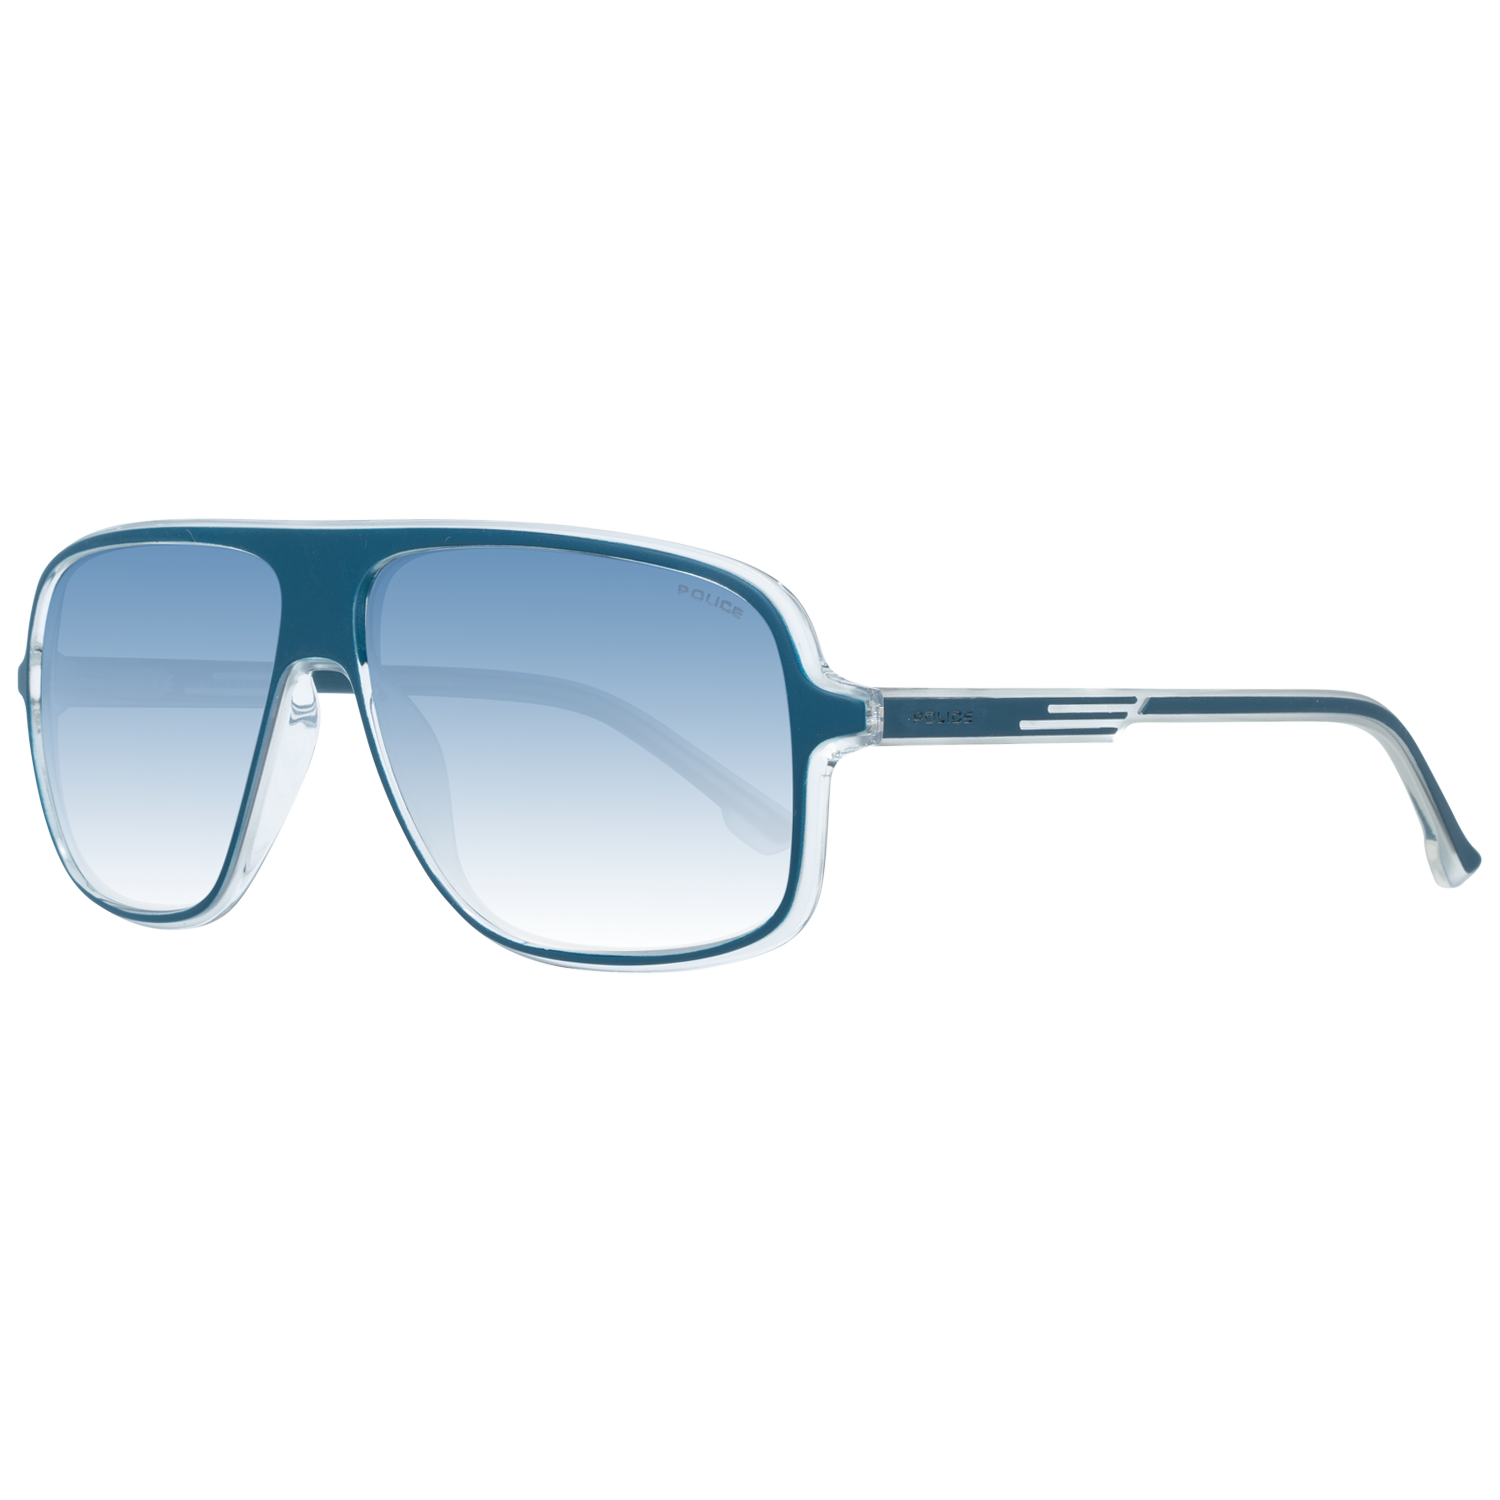 Police Sunglasses Police Sunglasses SPL961 6RVP 60 Polarized Eyeglasses Eyewear UK USA Australia 